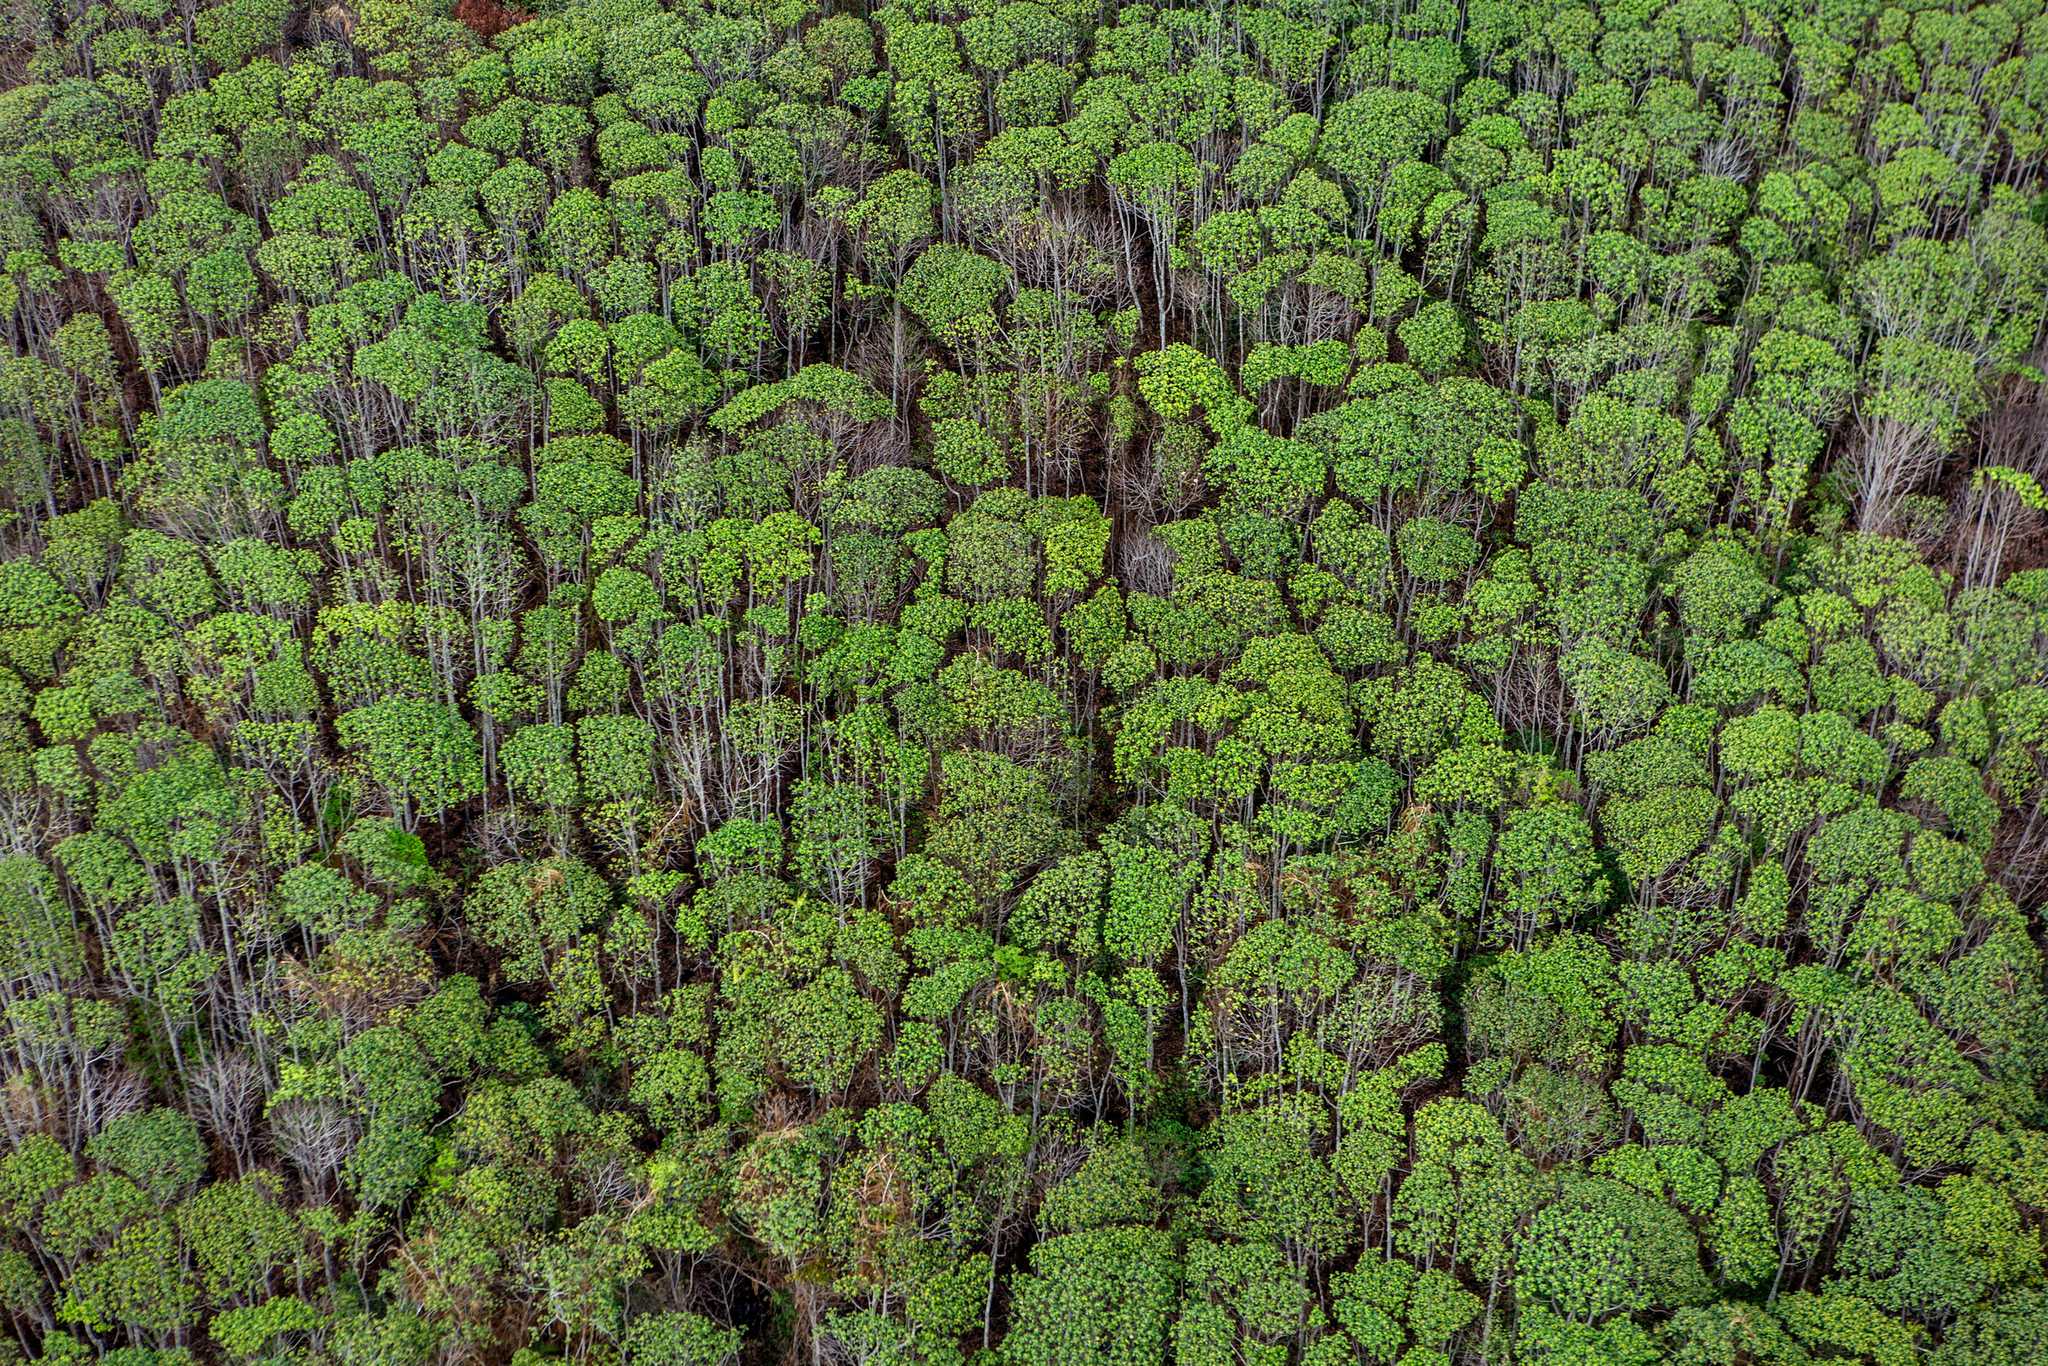 Peatland forest canopy at the borders of the Sebangau National Park in Katingan, Central Kalimantan.